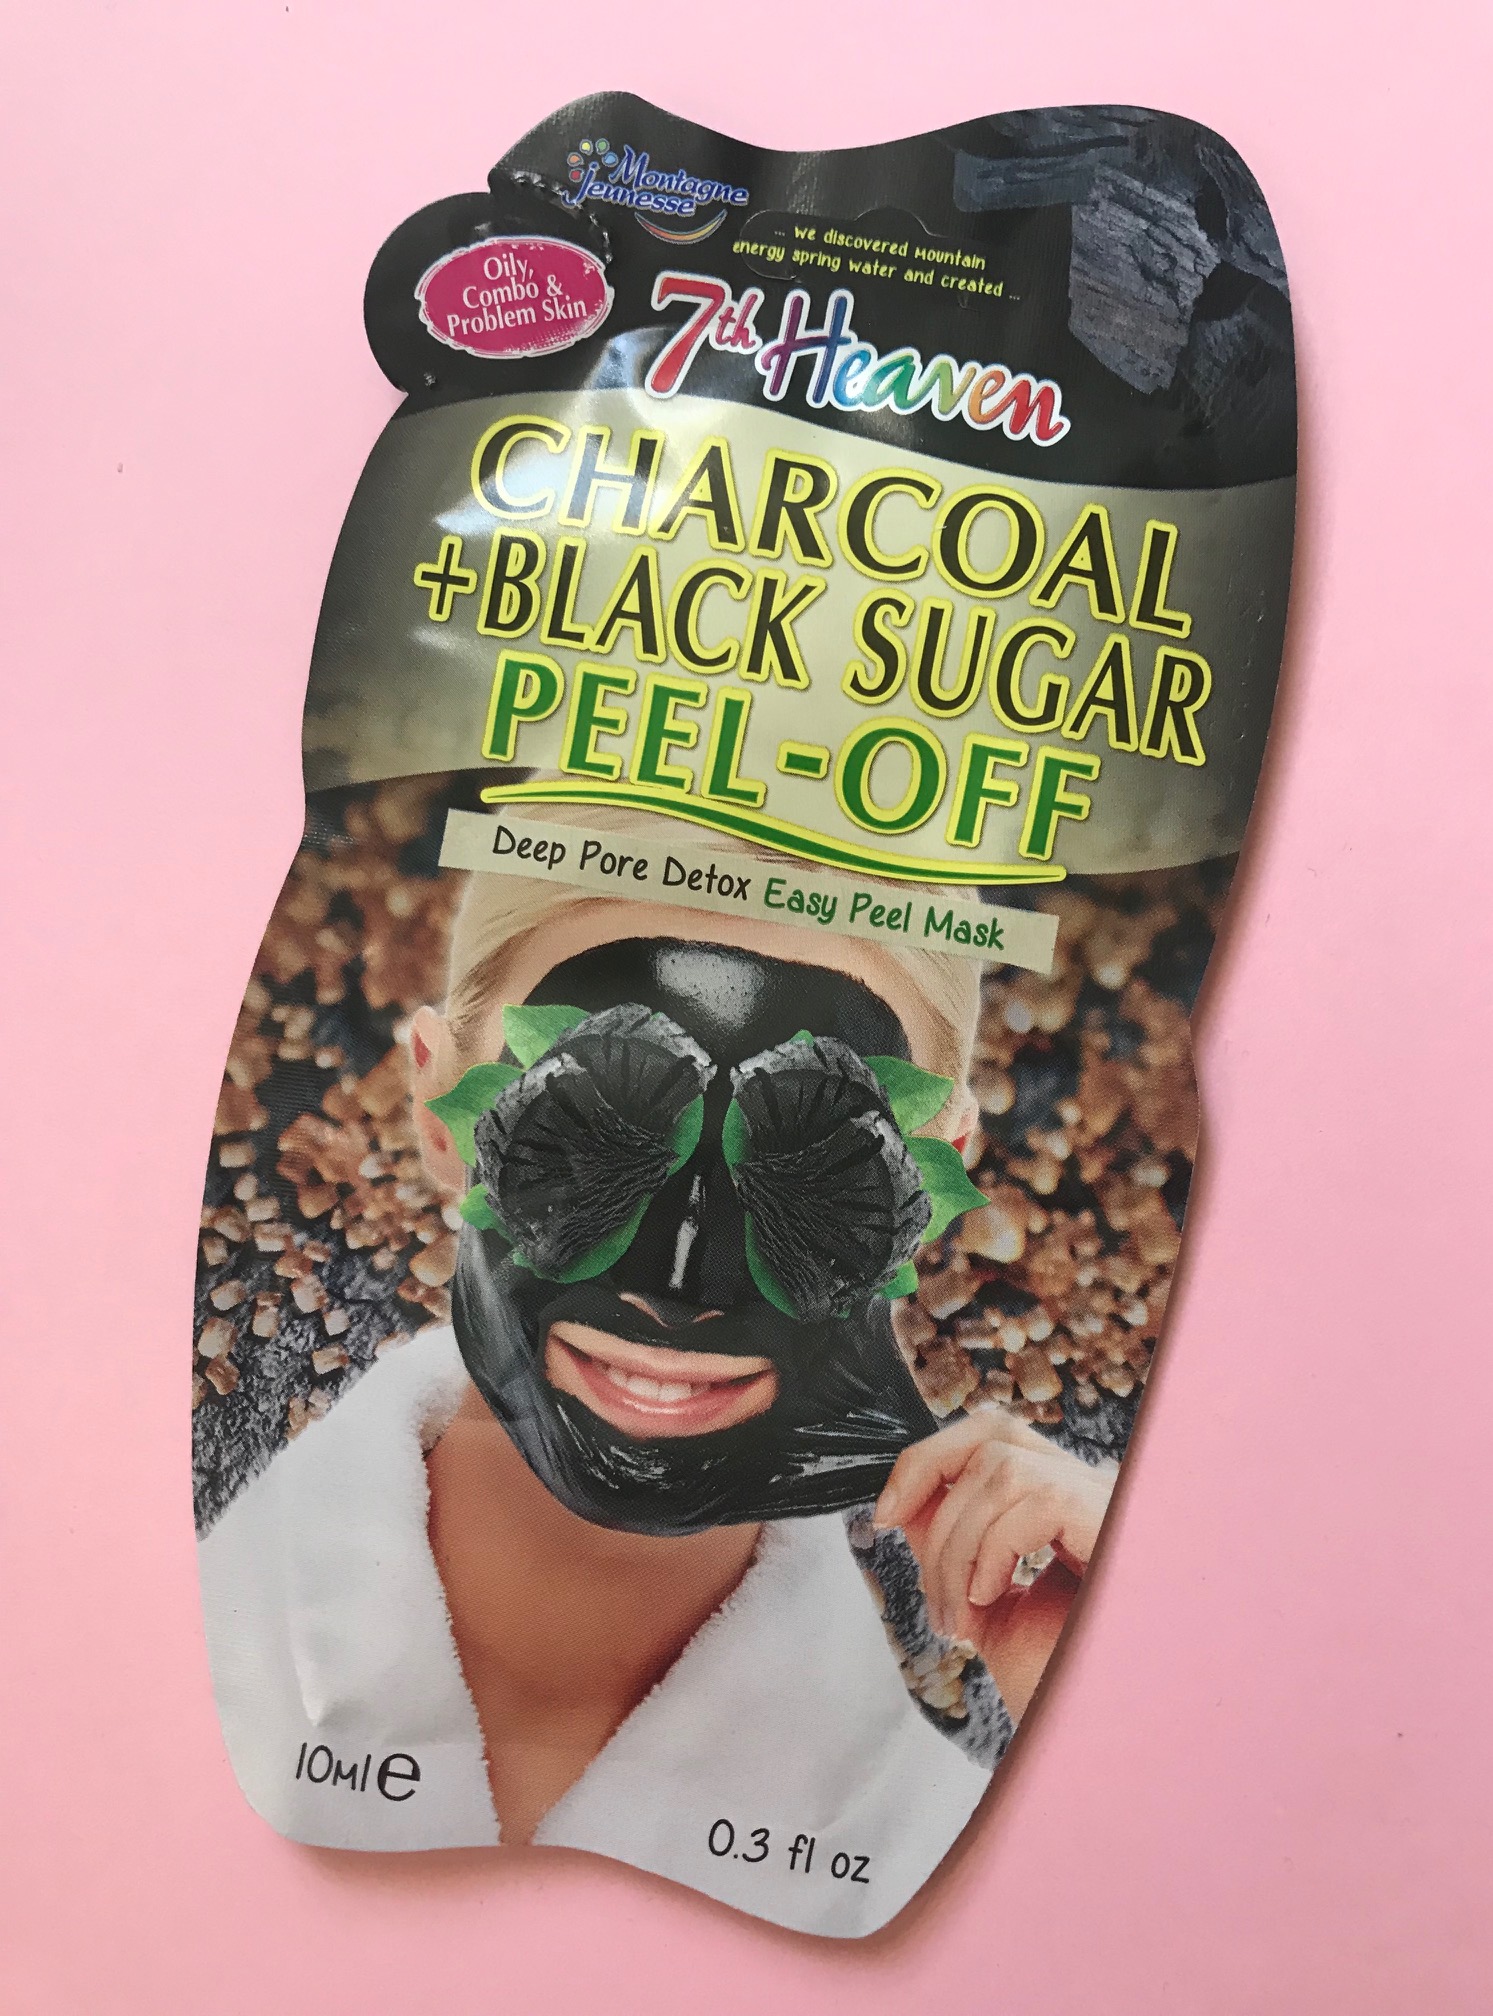 &th Heaven Charcoal & Black Sugar Peel-off Mask, neversaydiebeauty.com